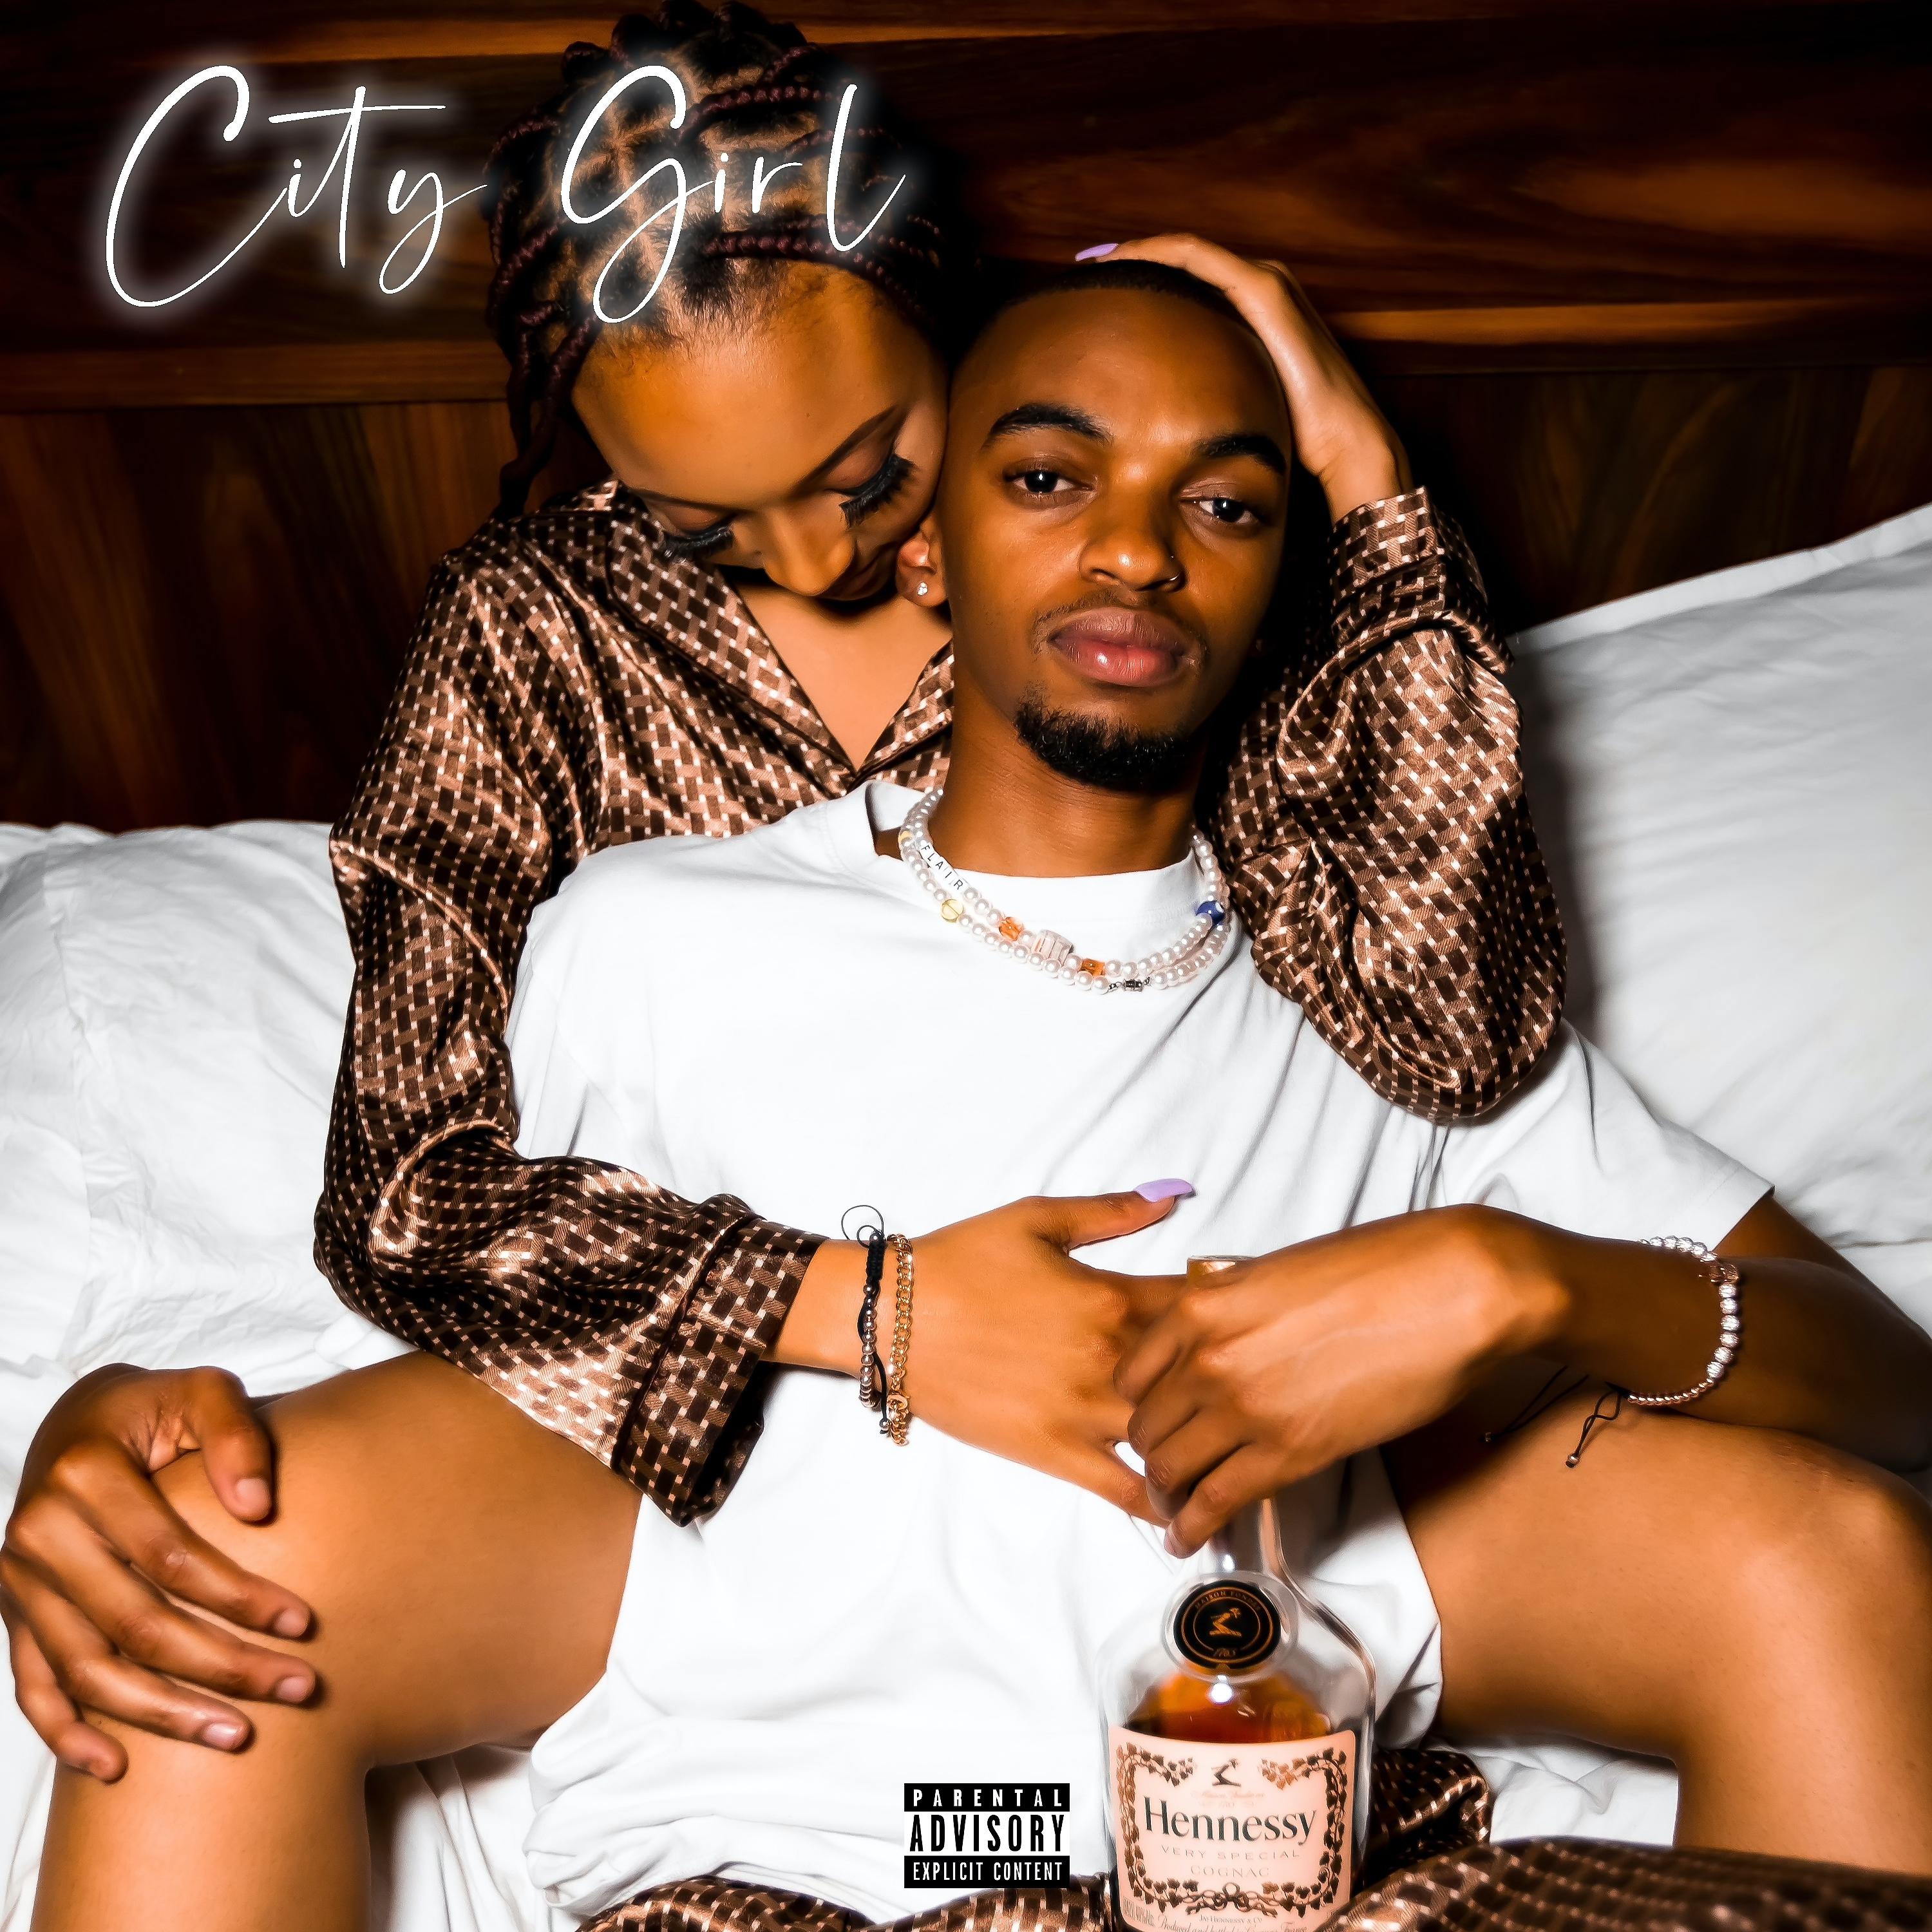 Постер альбома City Girl